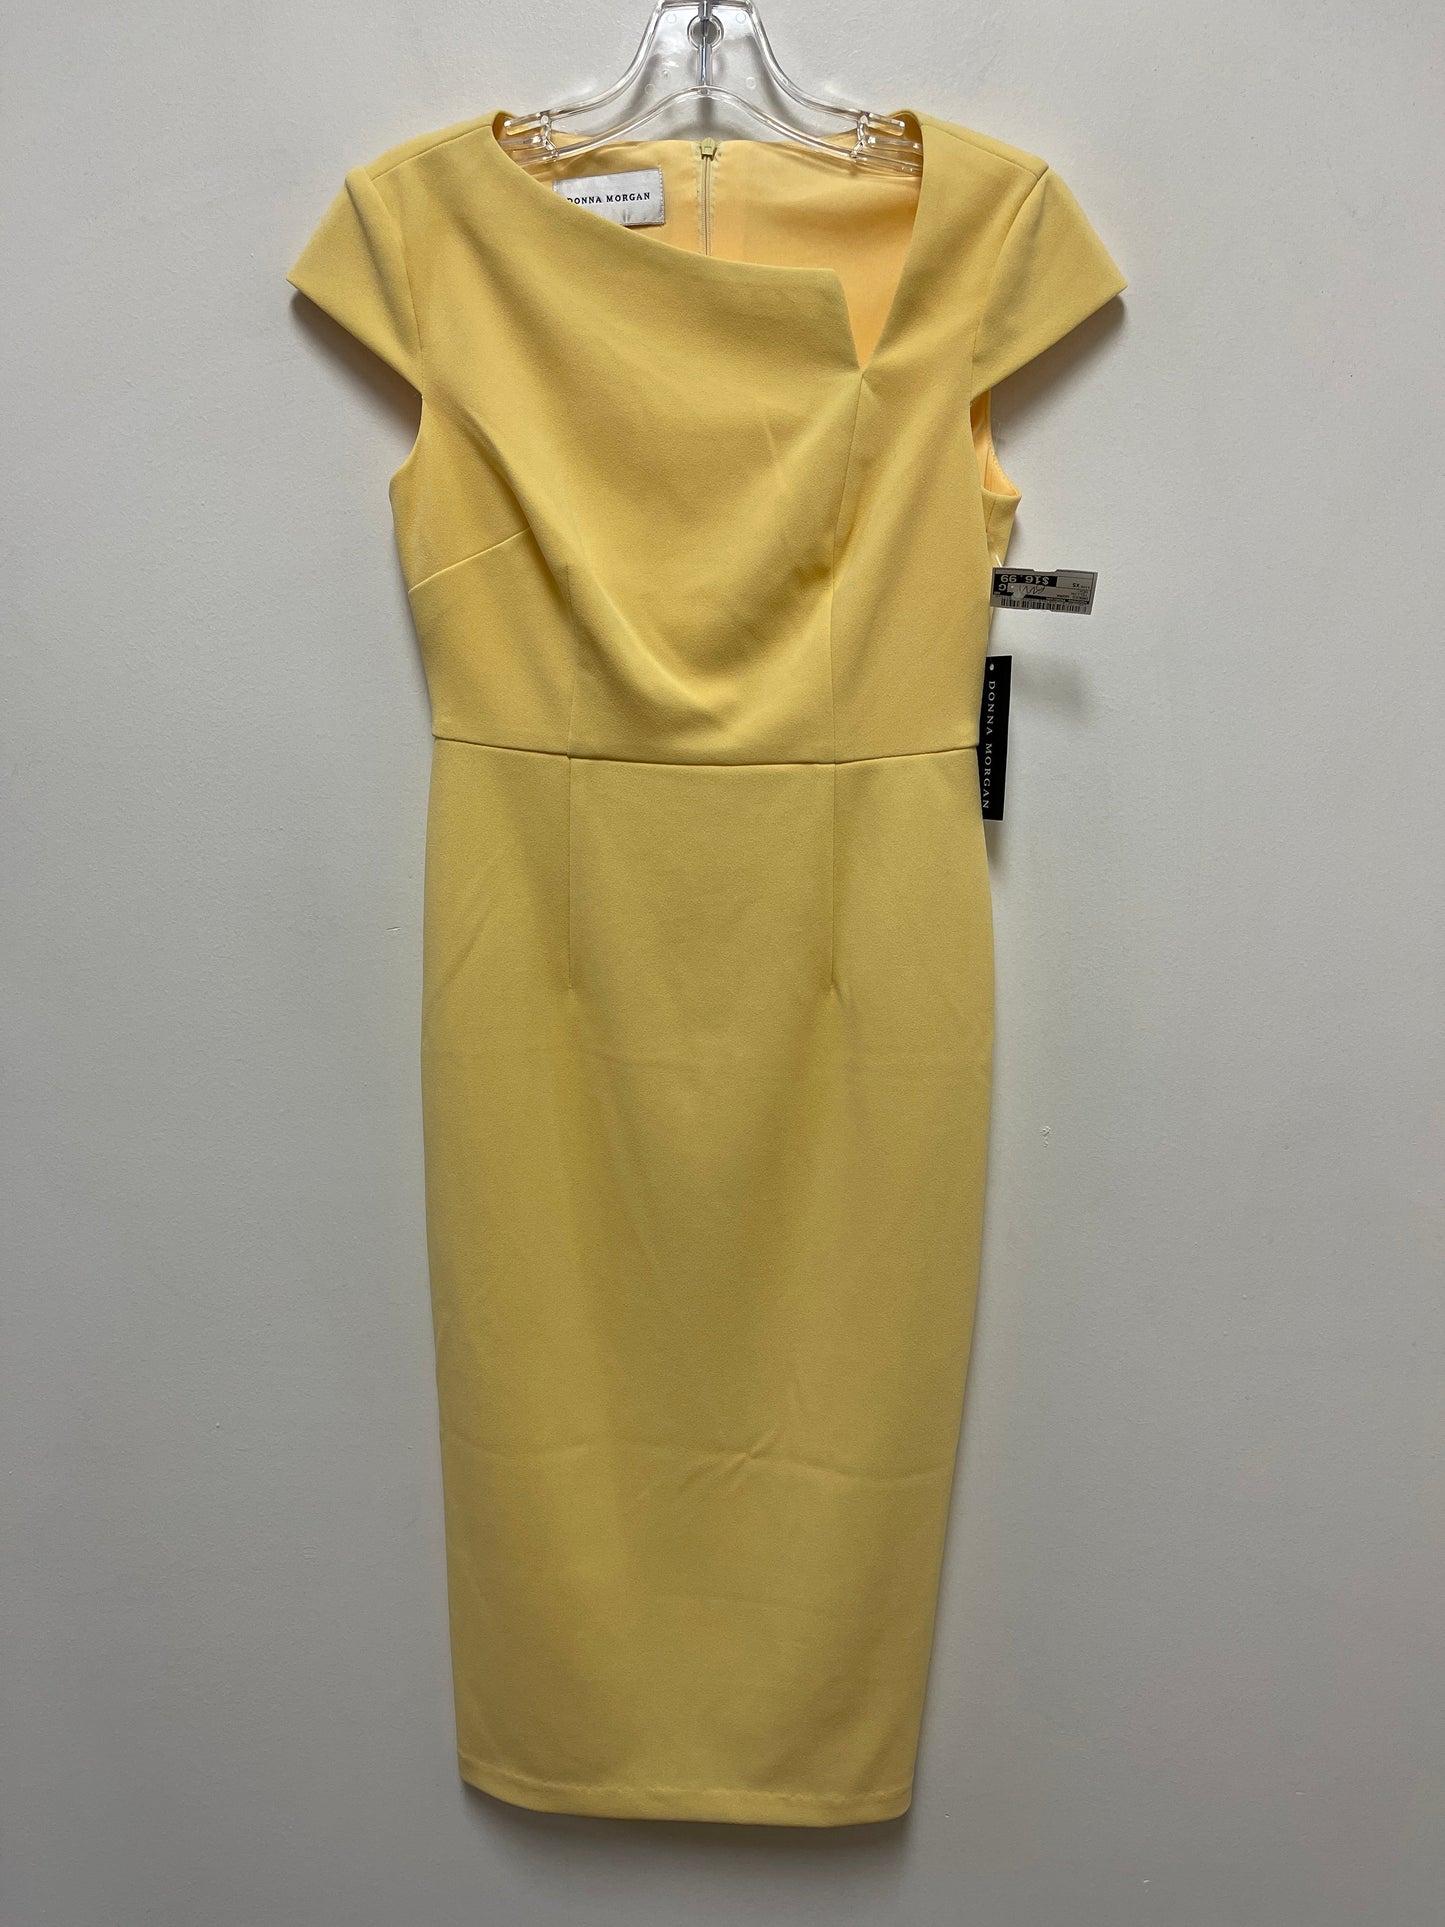 Yellow Dress Work Donna Morgan, Size Xs